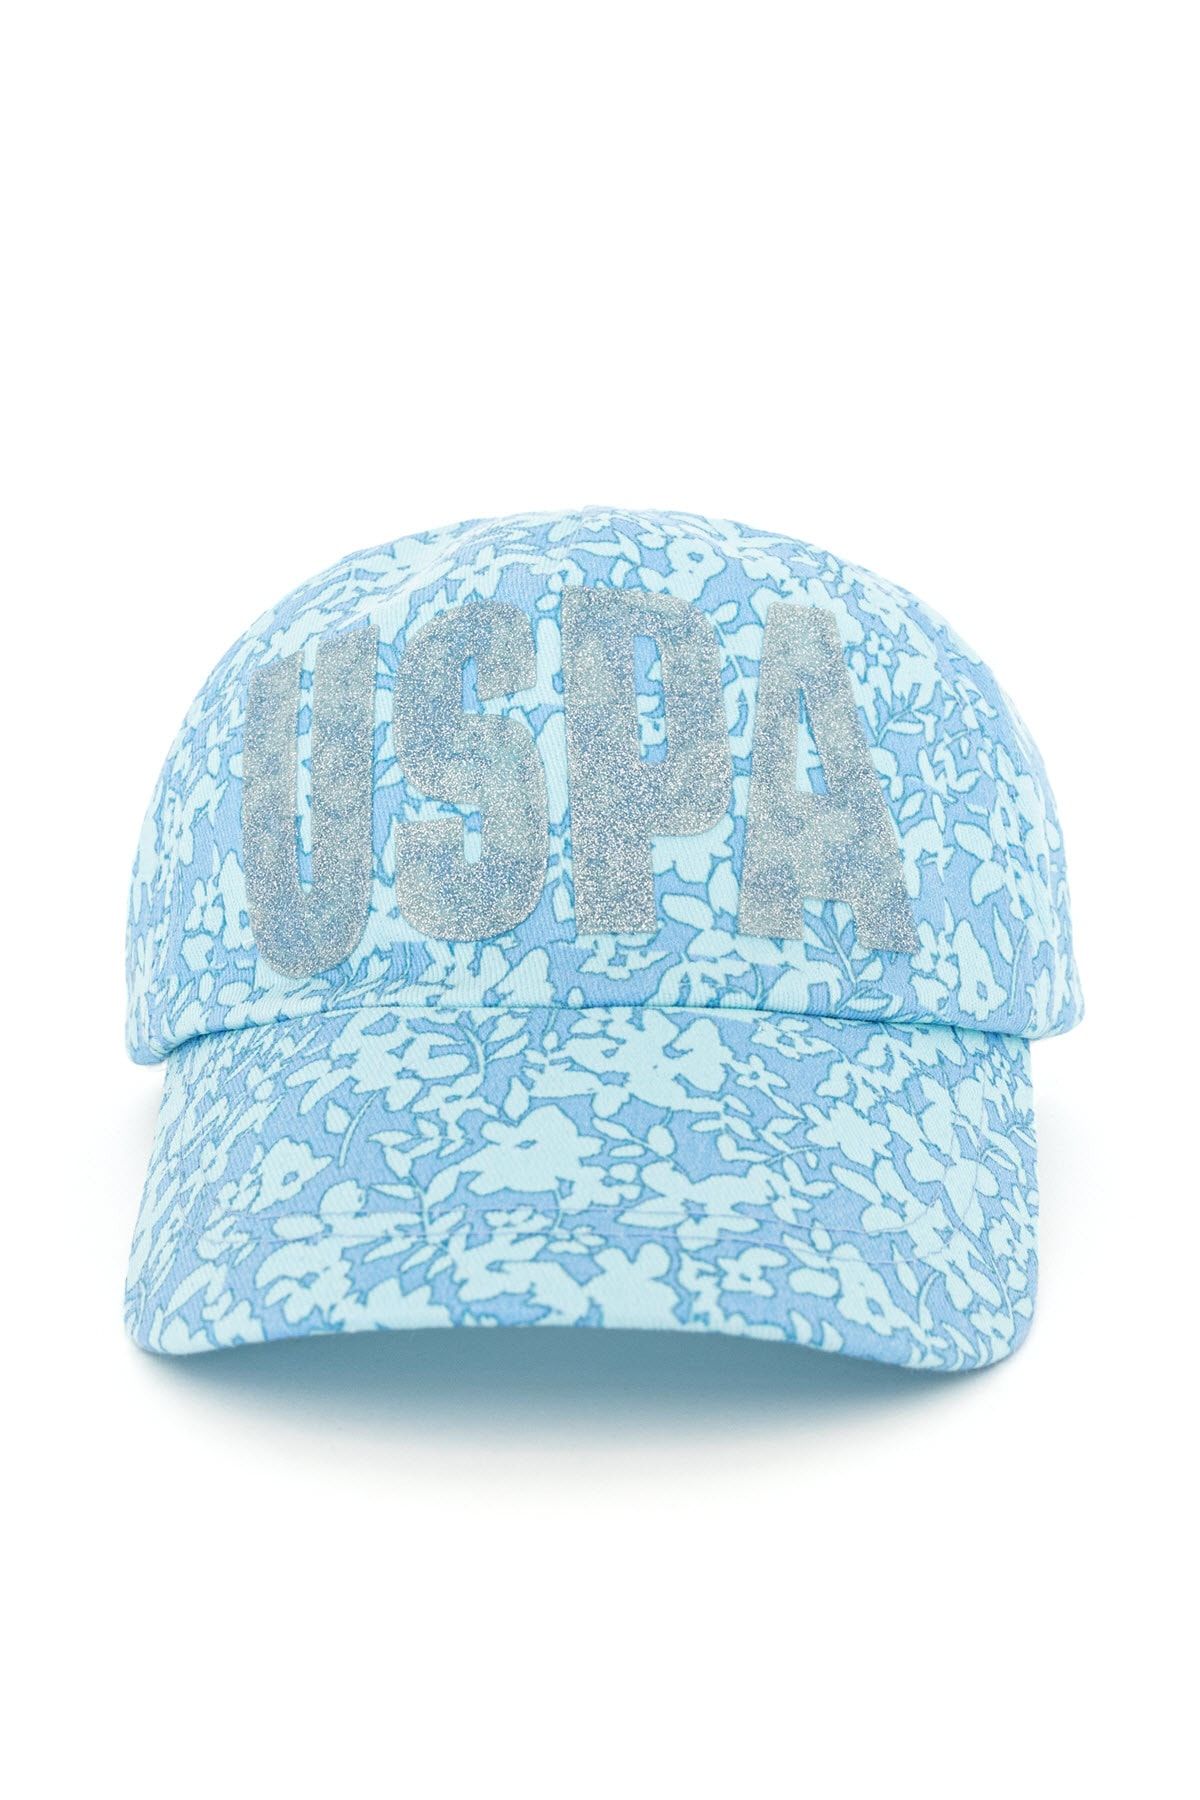 U.S. Polo Assn. Mavi Kadın Şapka